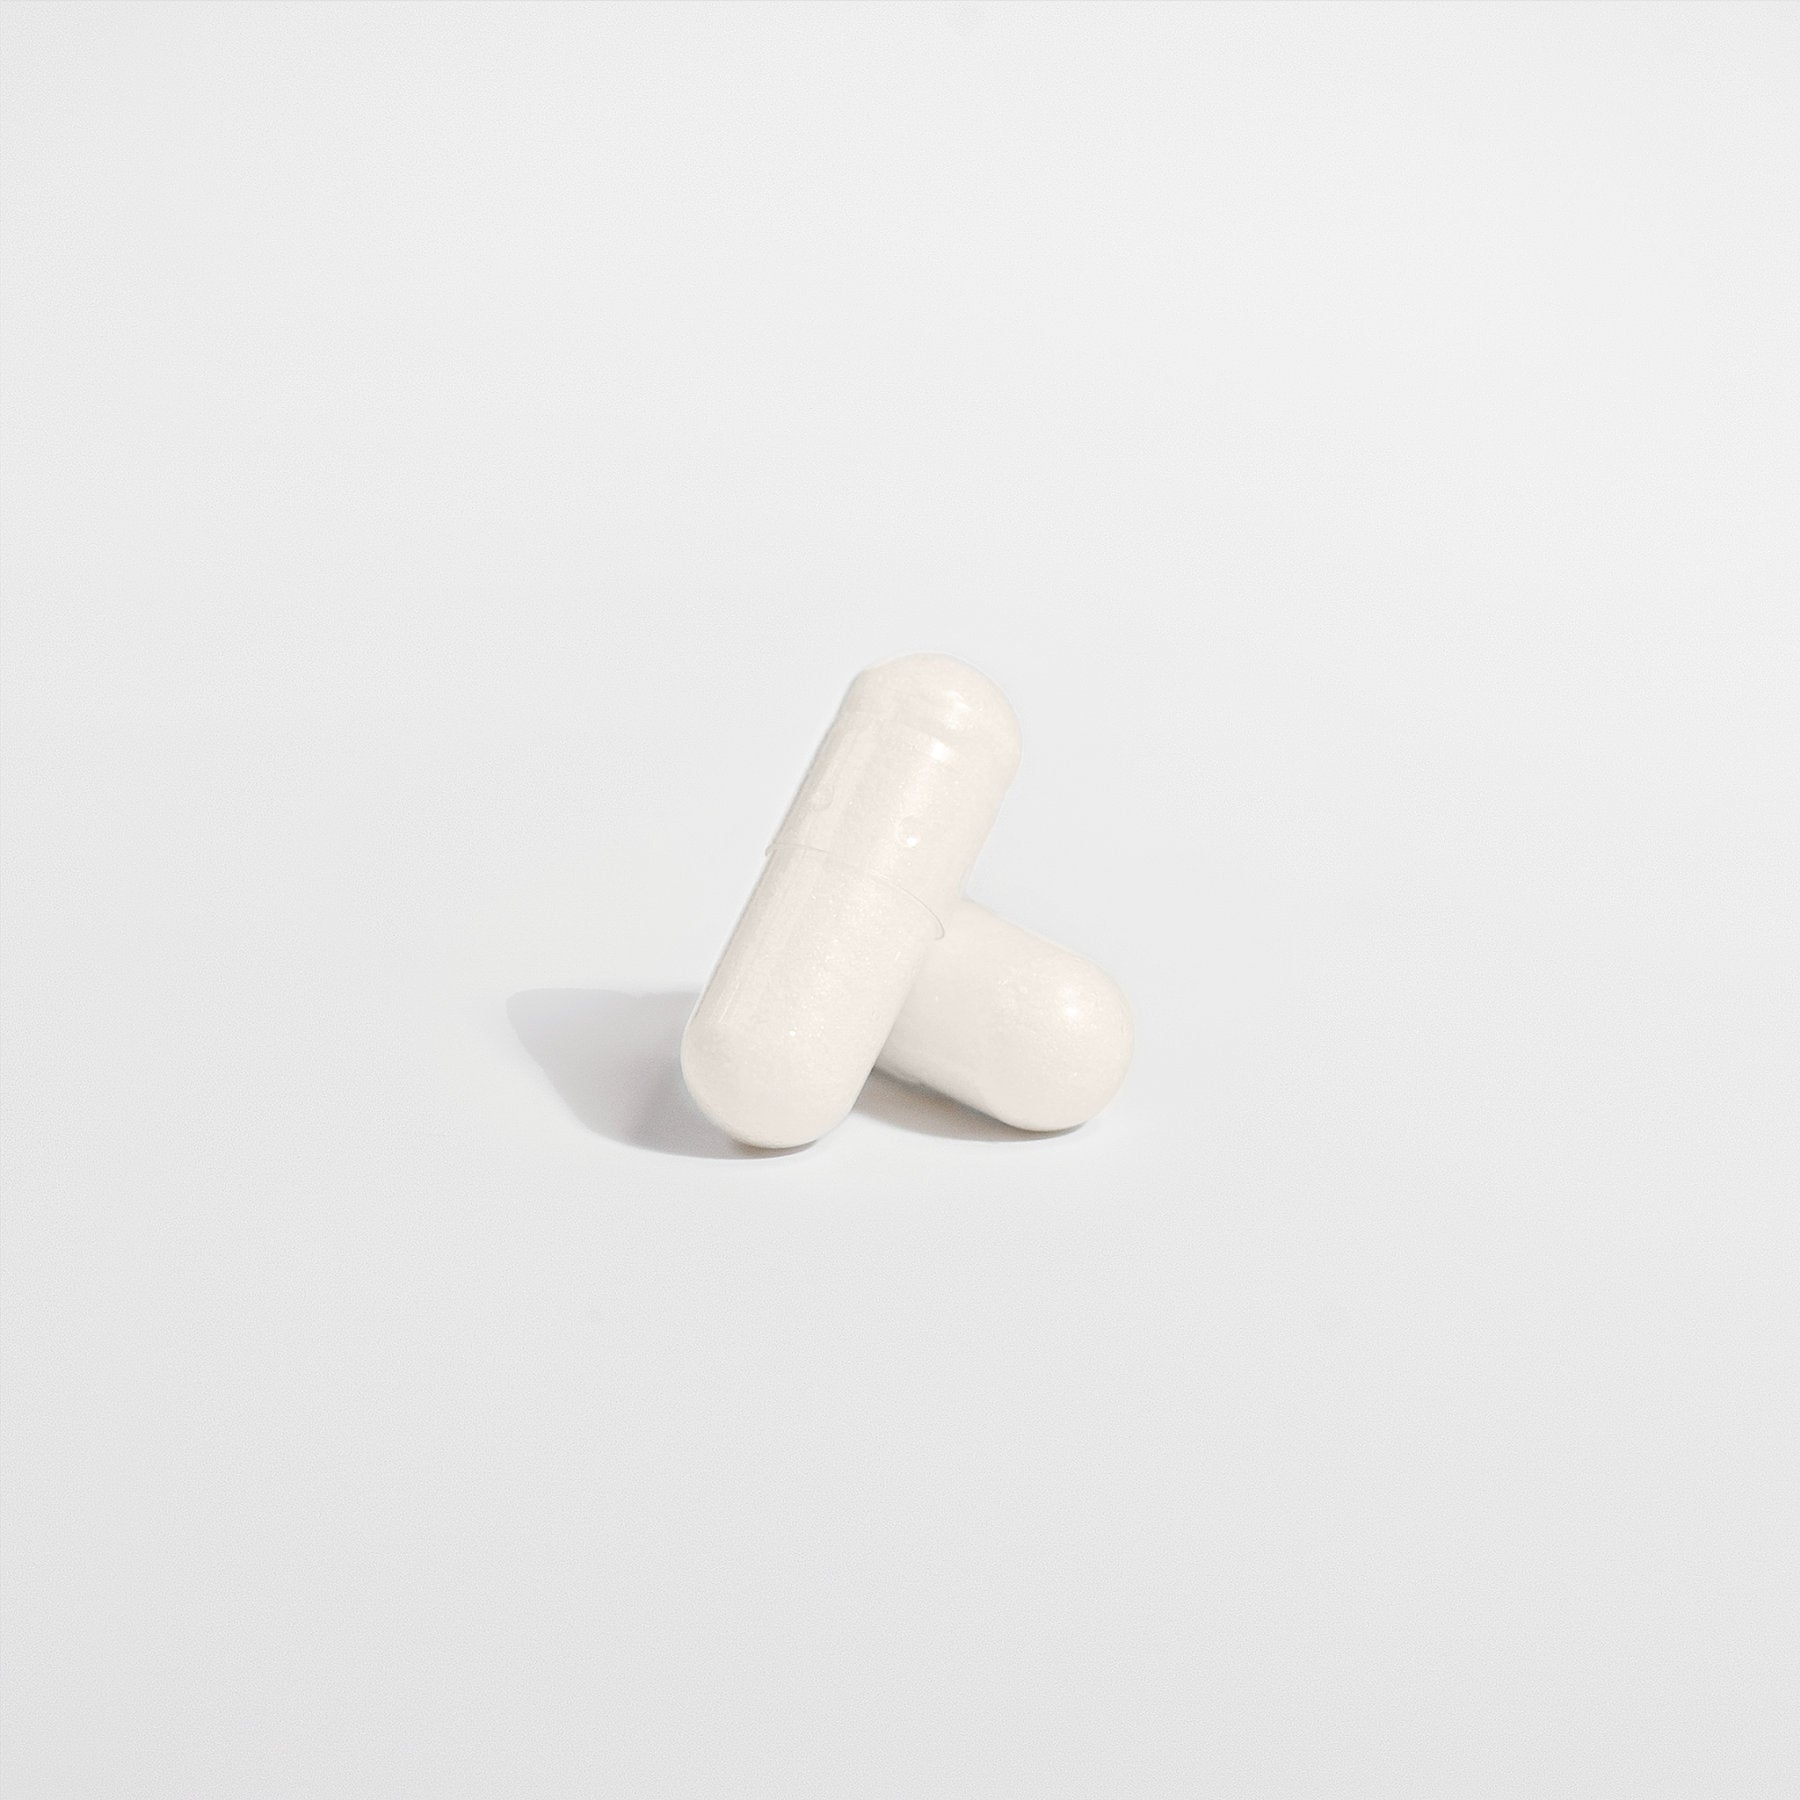 Youth Elixir | Anti-Aging Resveratrol Formula